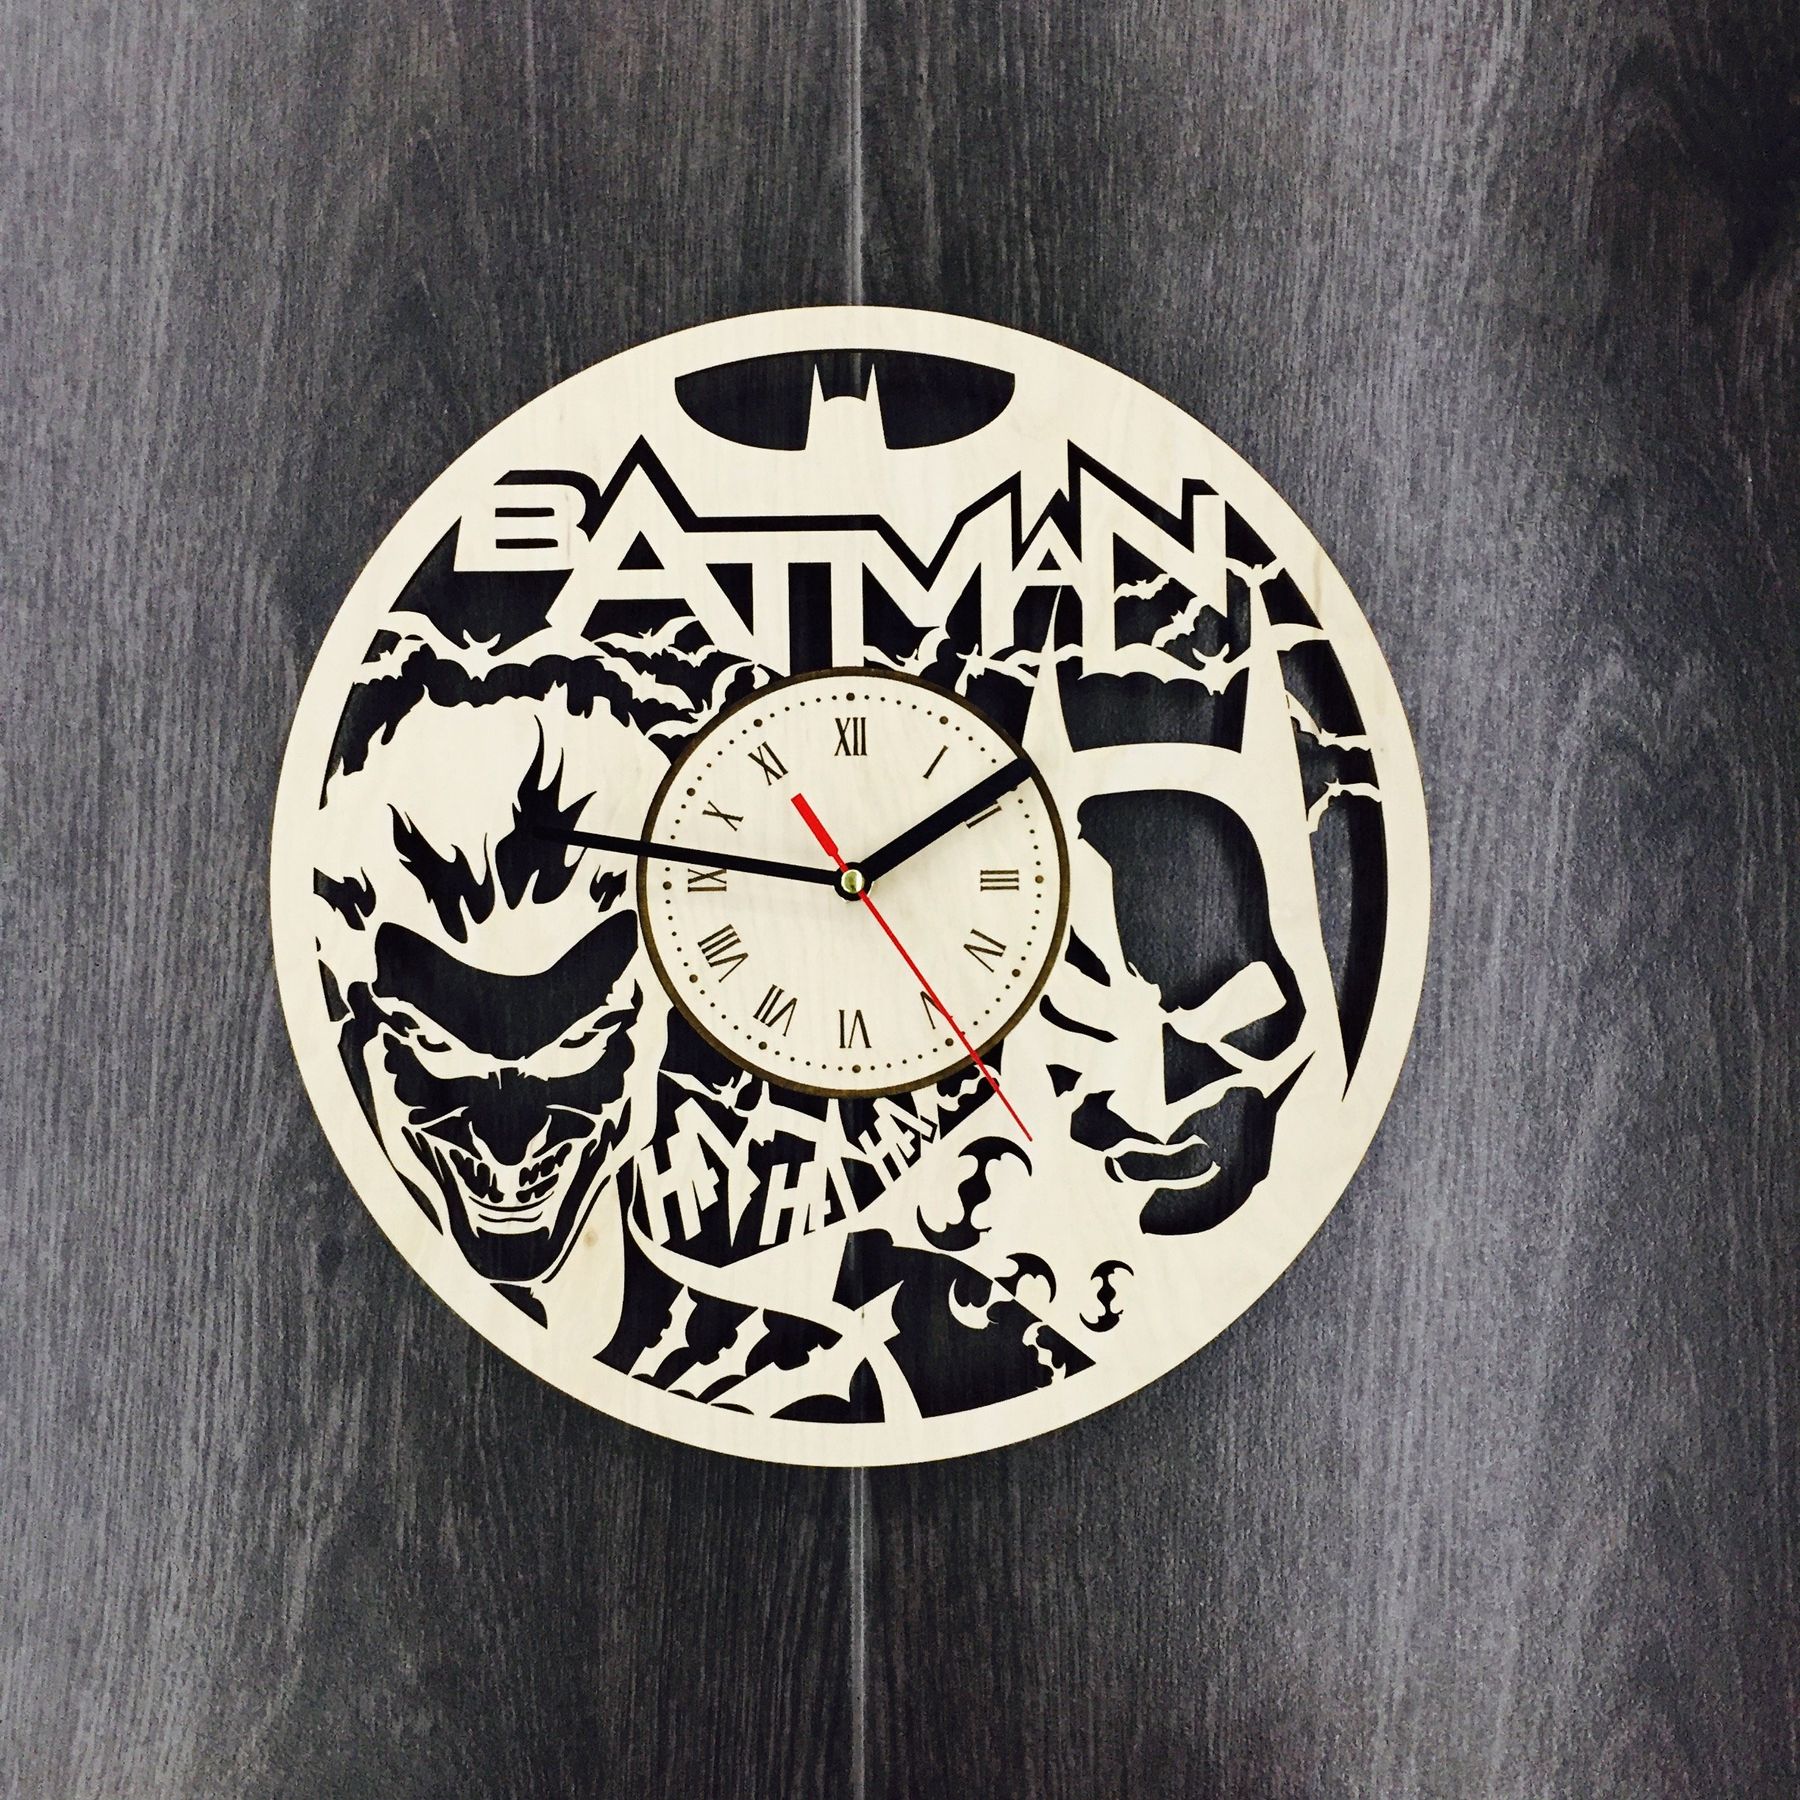 Бэтмен деревянные часы. Часы в виде Бэтмен настенные кастомные. Бетмен часы лазерная резка. Часы на дачу. Часы 31 15